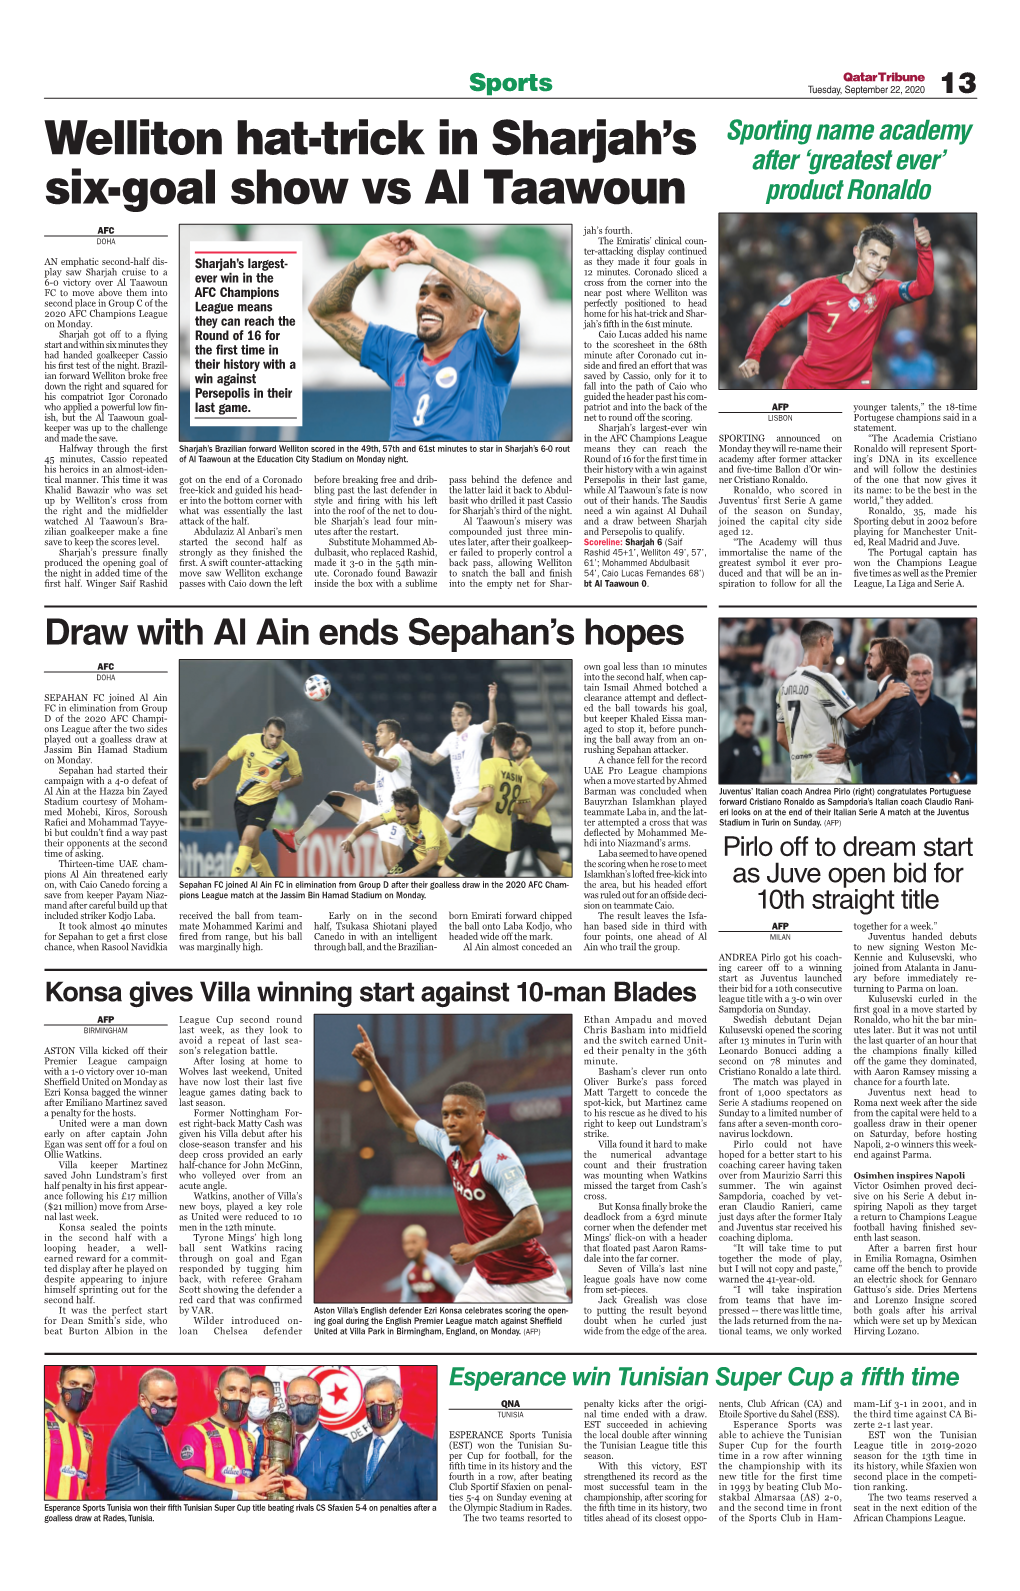 Welliton Hat-Trick in Sharjah's Six-Goal Show Vs Al Taawoun